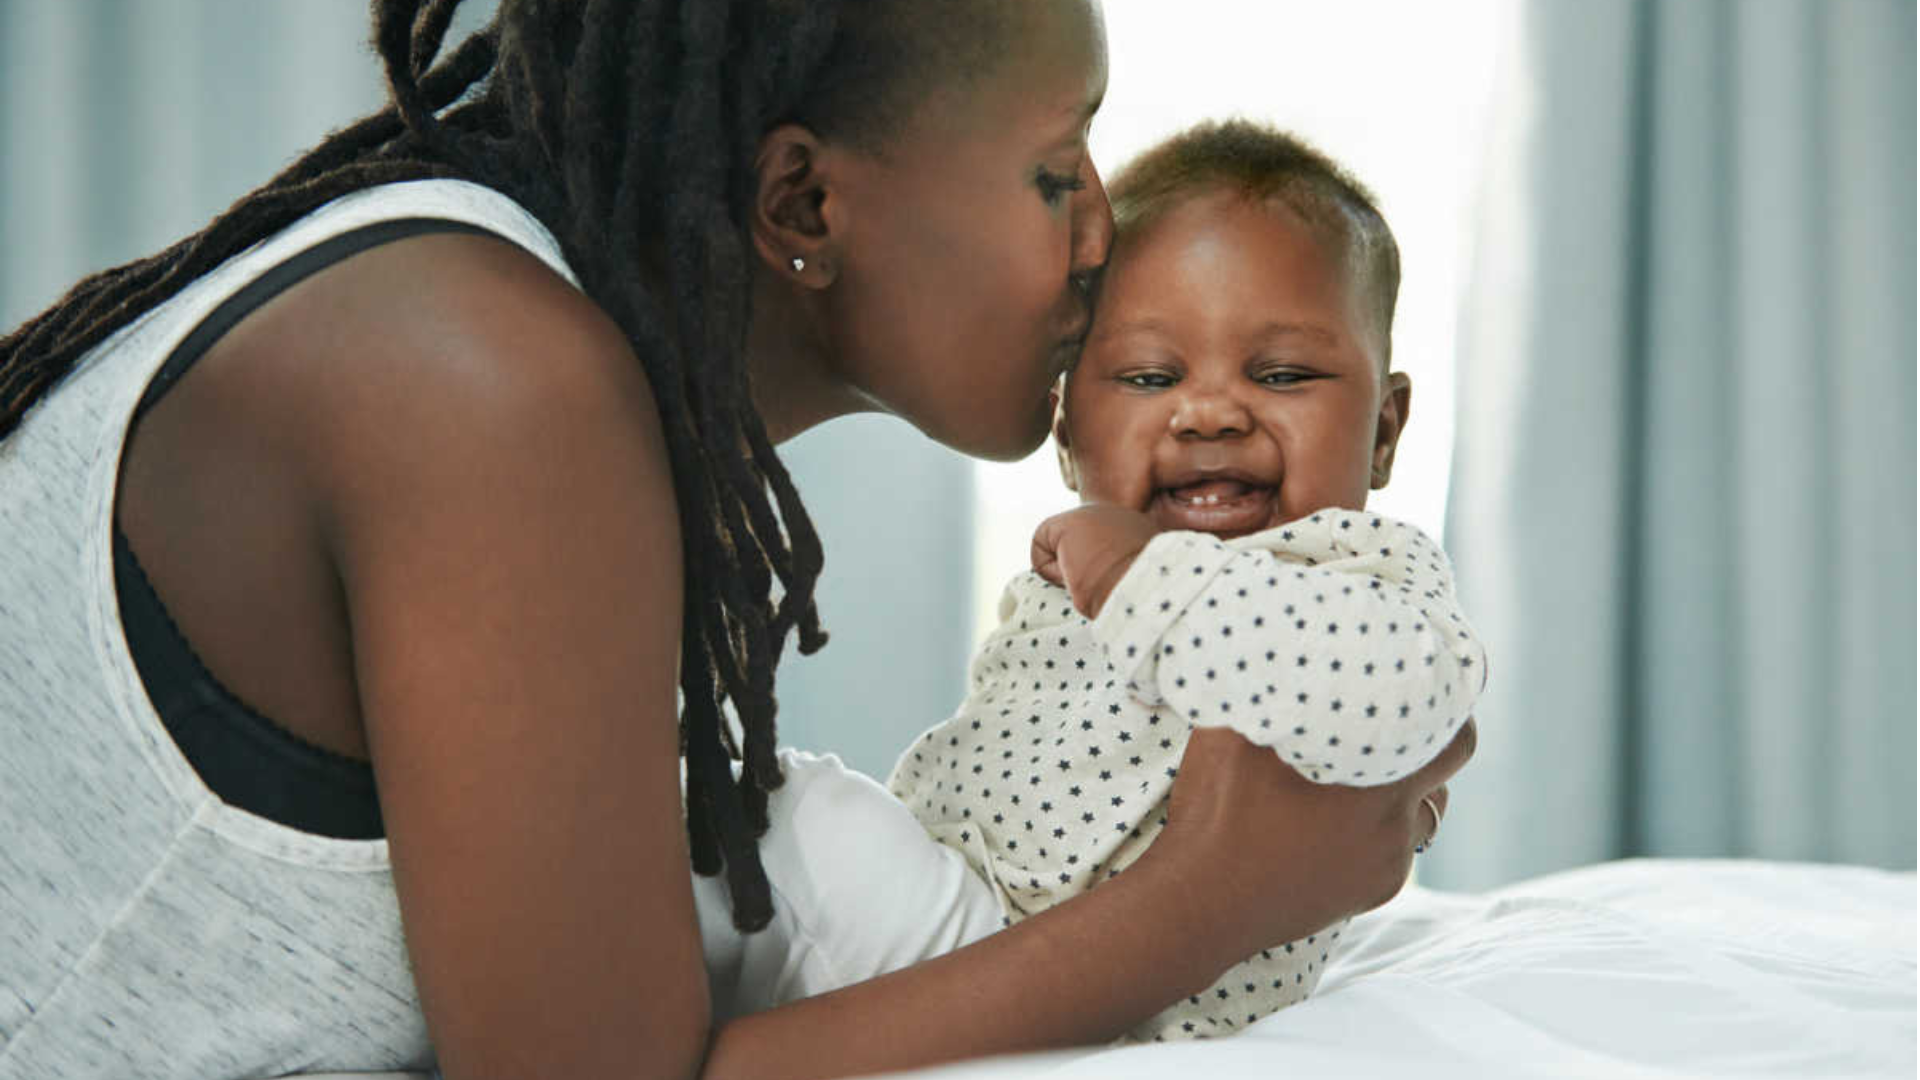 Oakland programs are supporting Black postpartum women